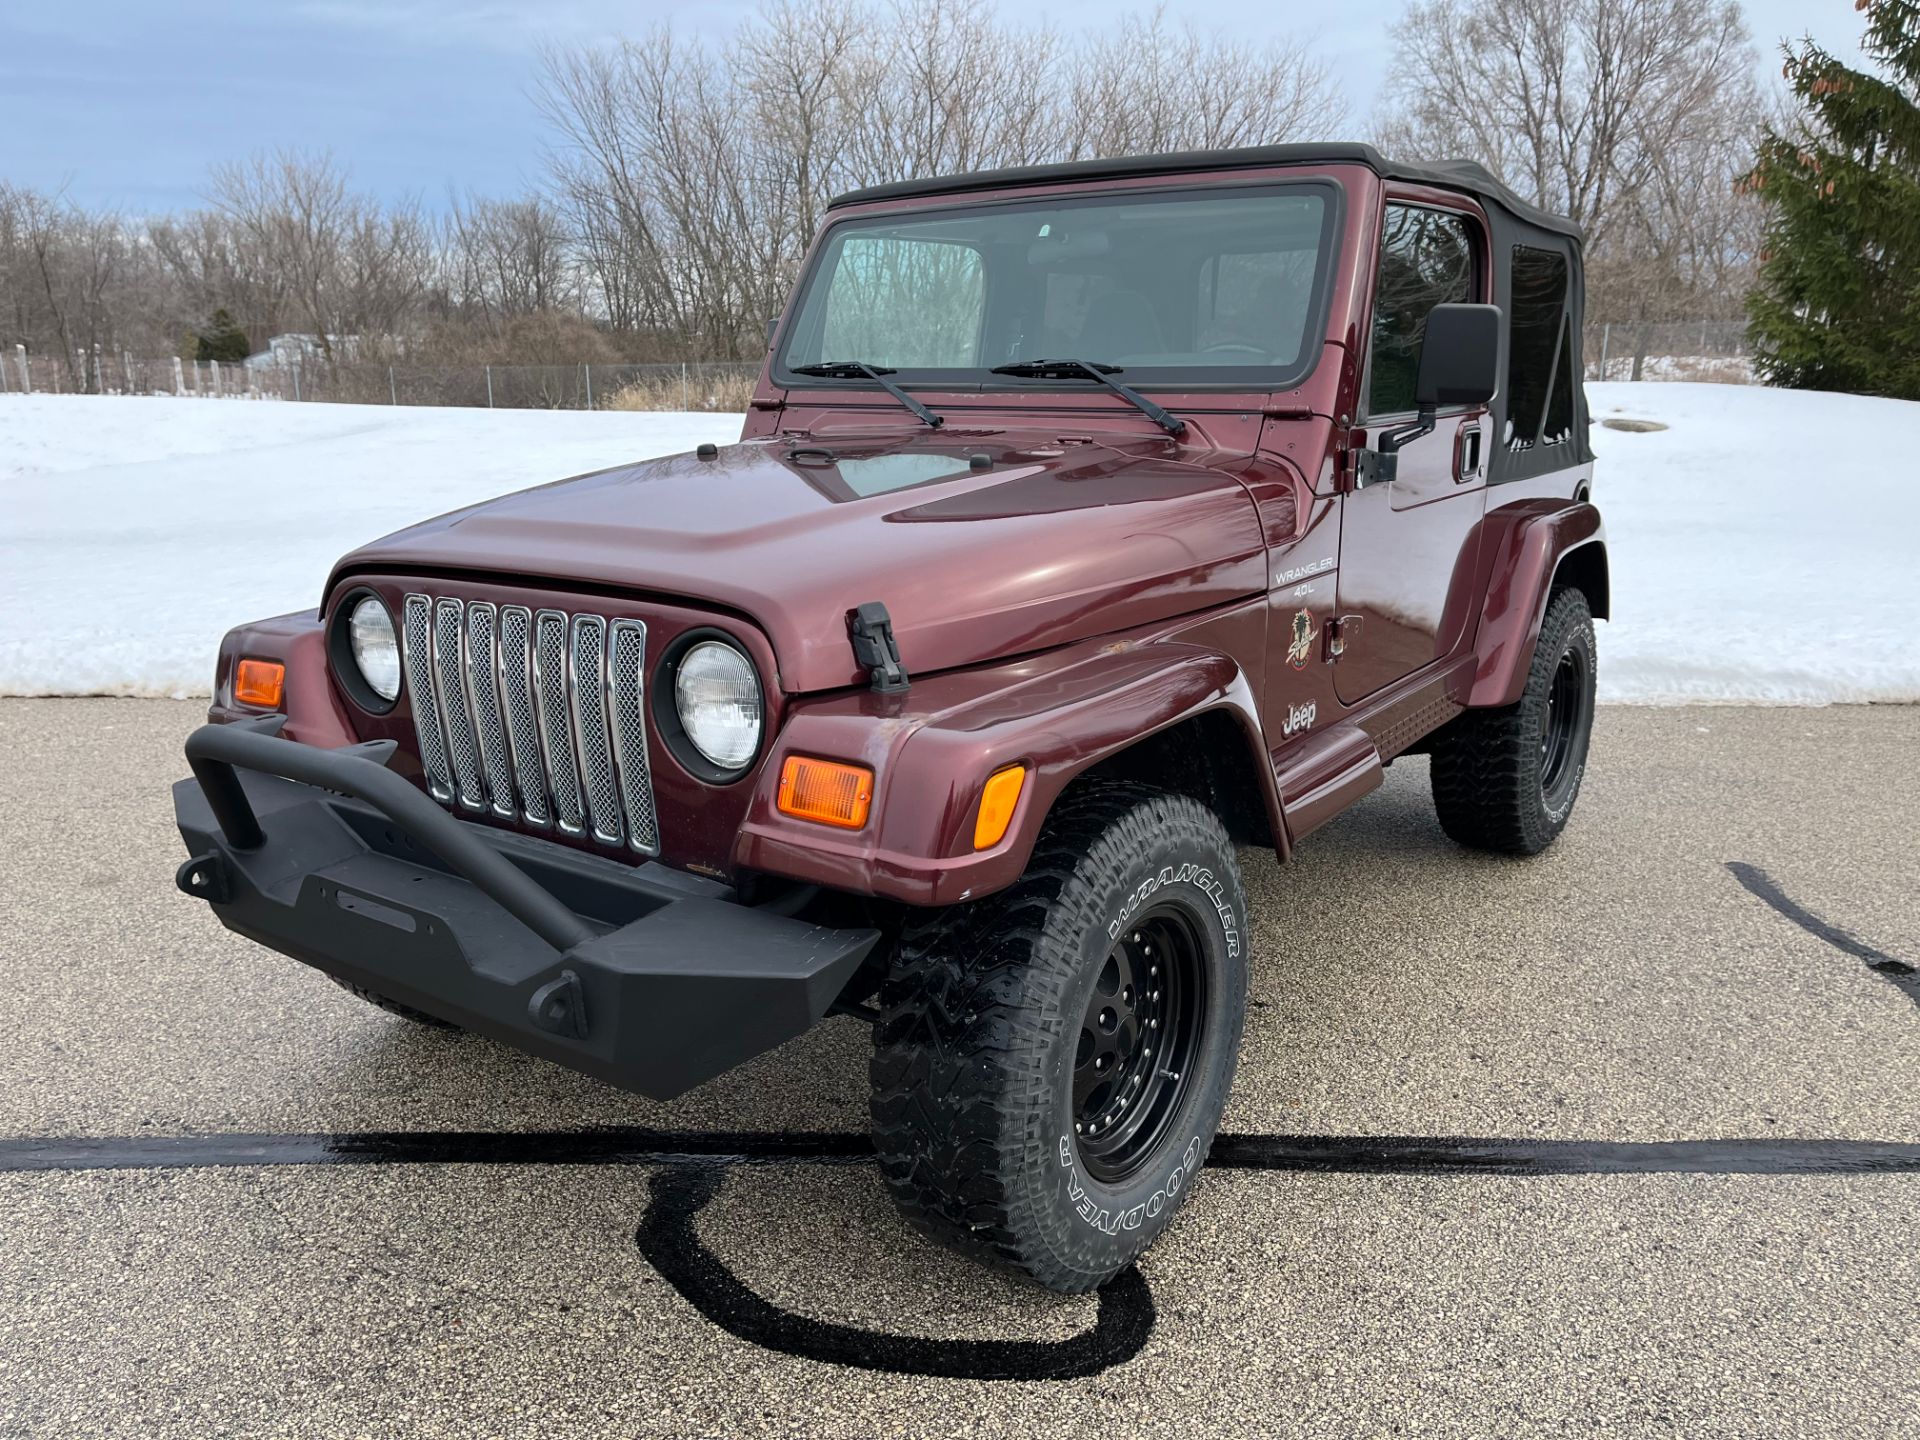 2001 Jeep® Wrangler Sahara in Big Bend, Wisconsin - Photo 3